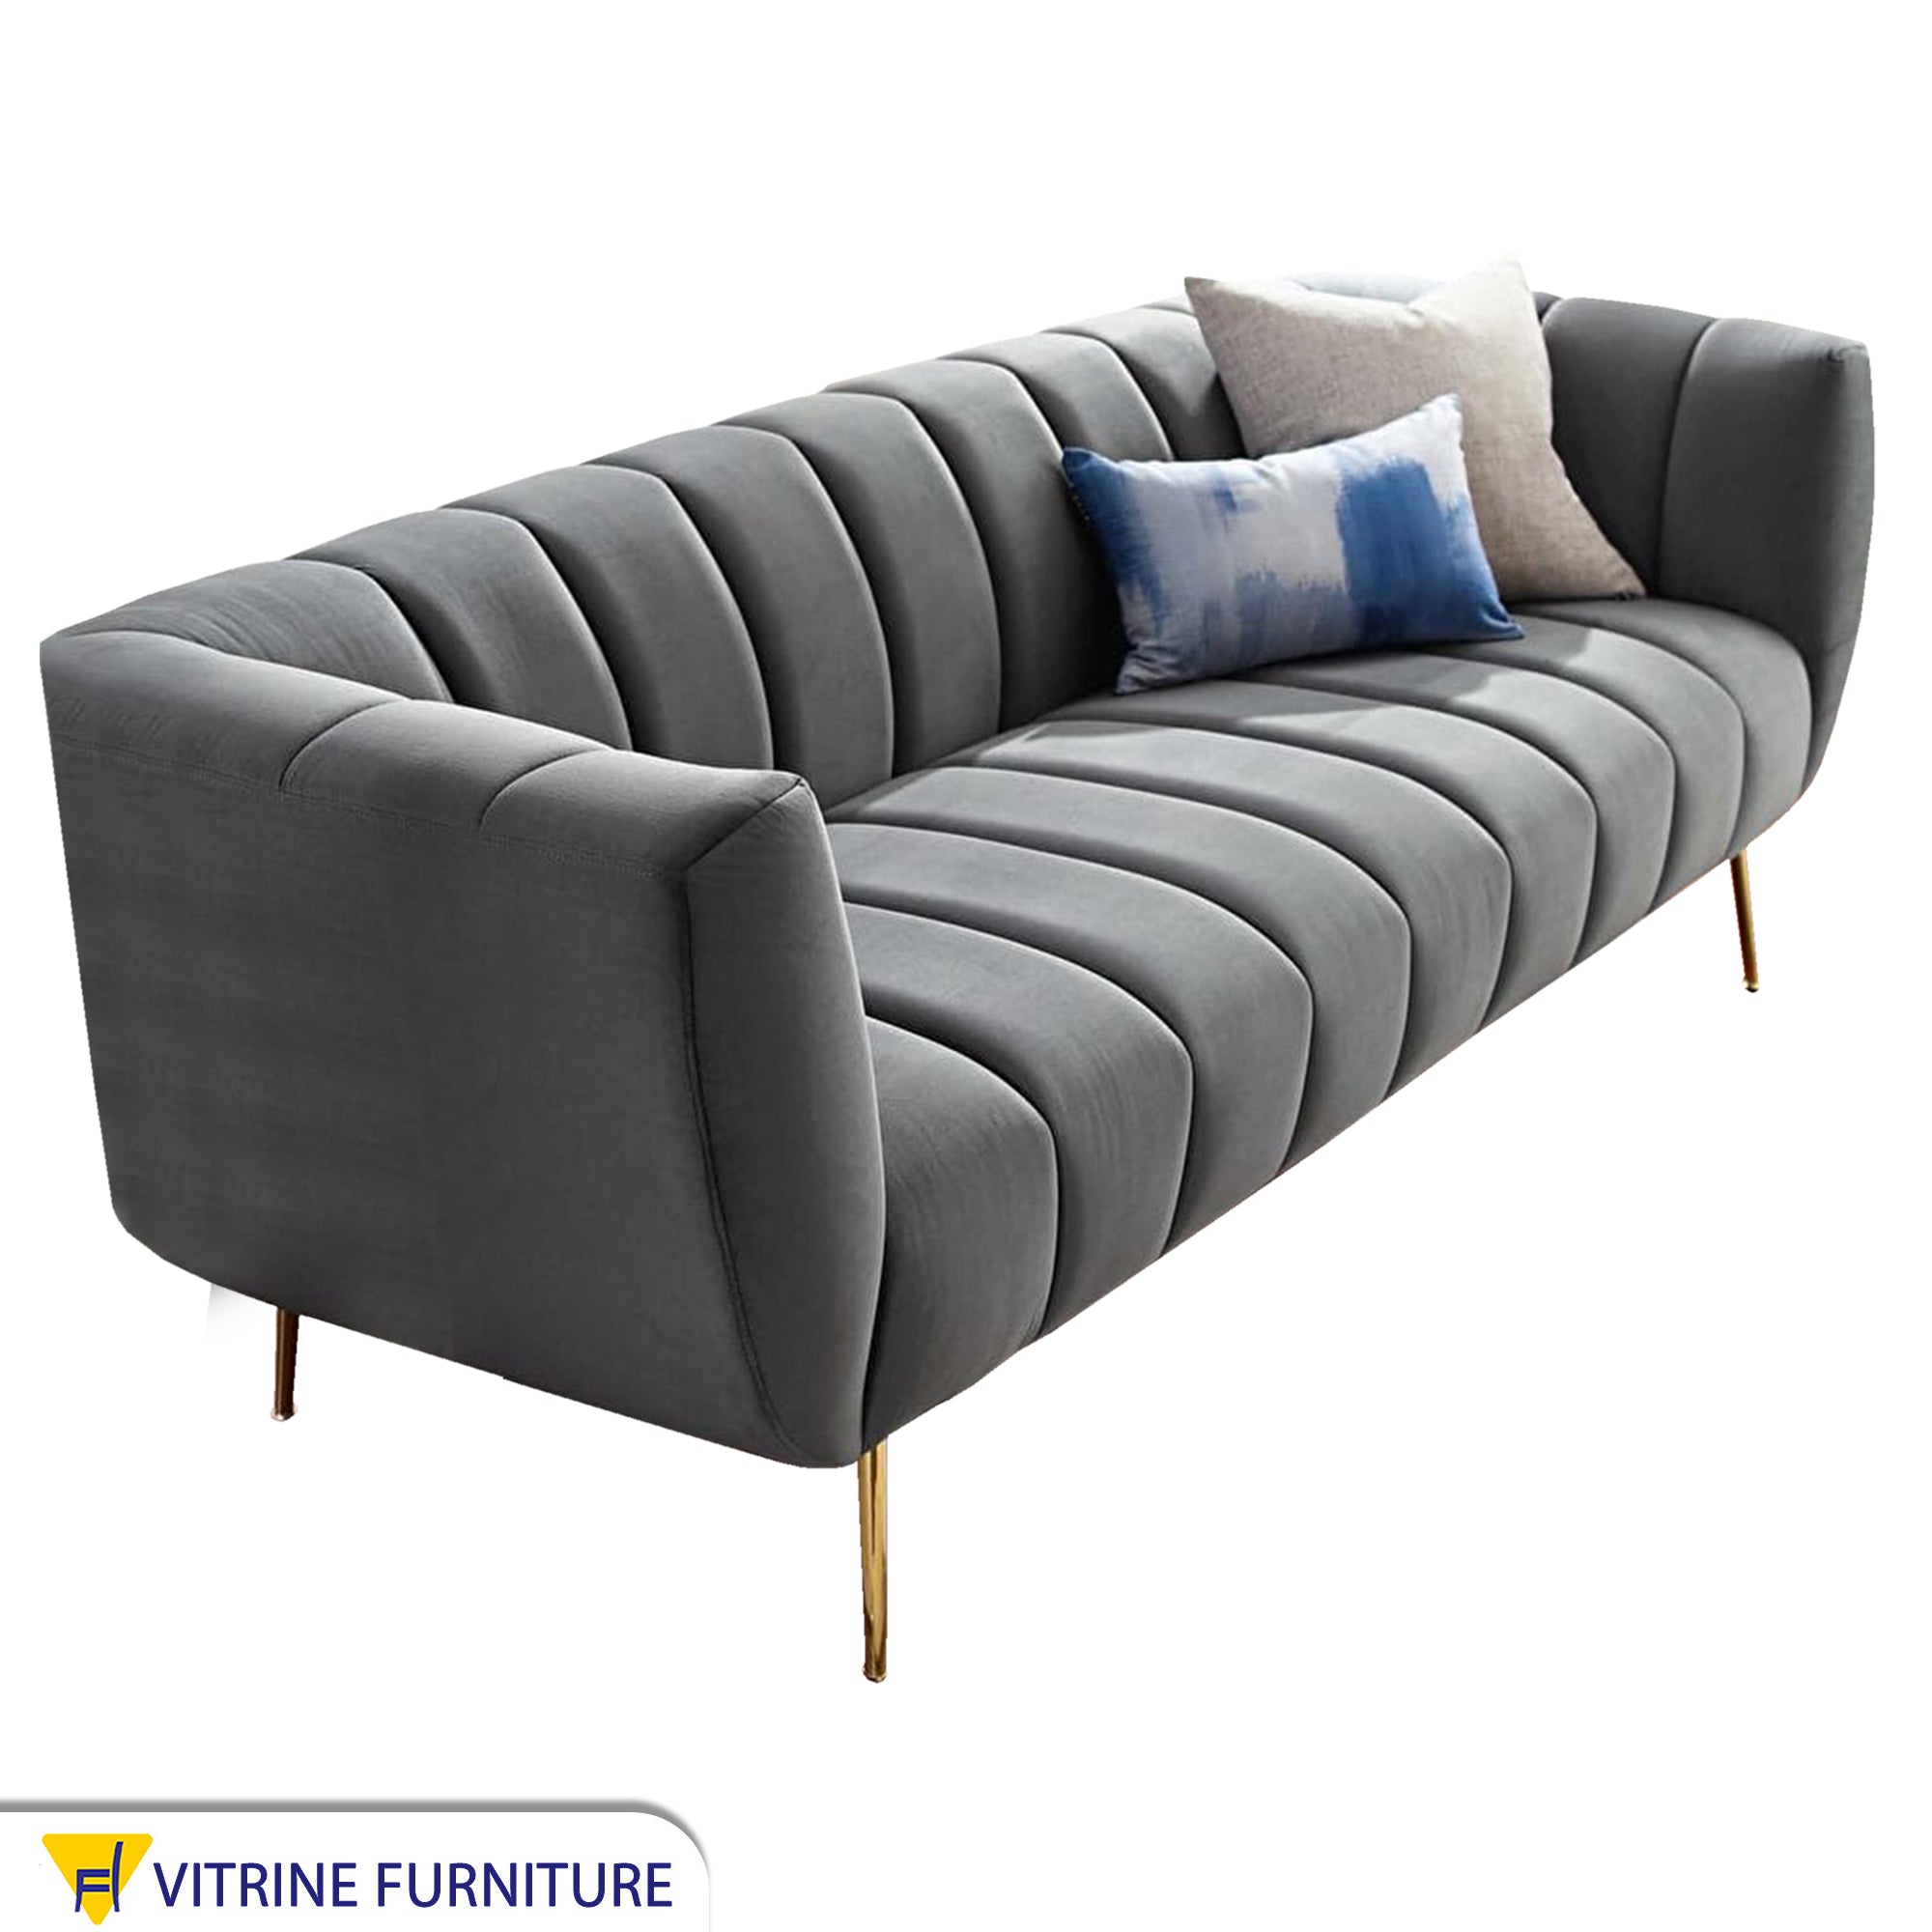 Modern light gray sofa with high legs